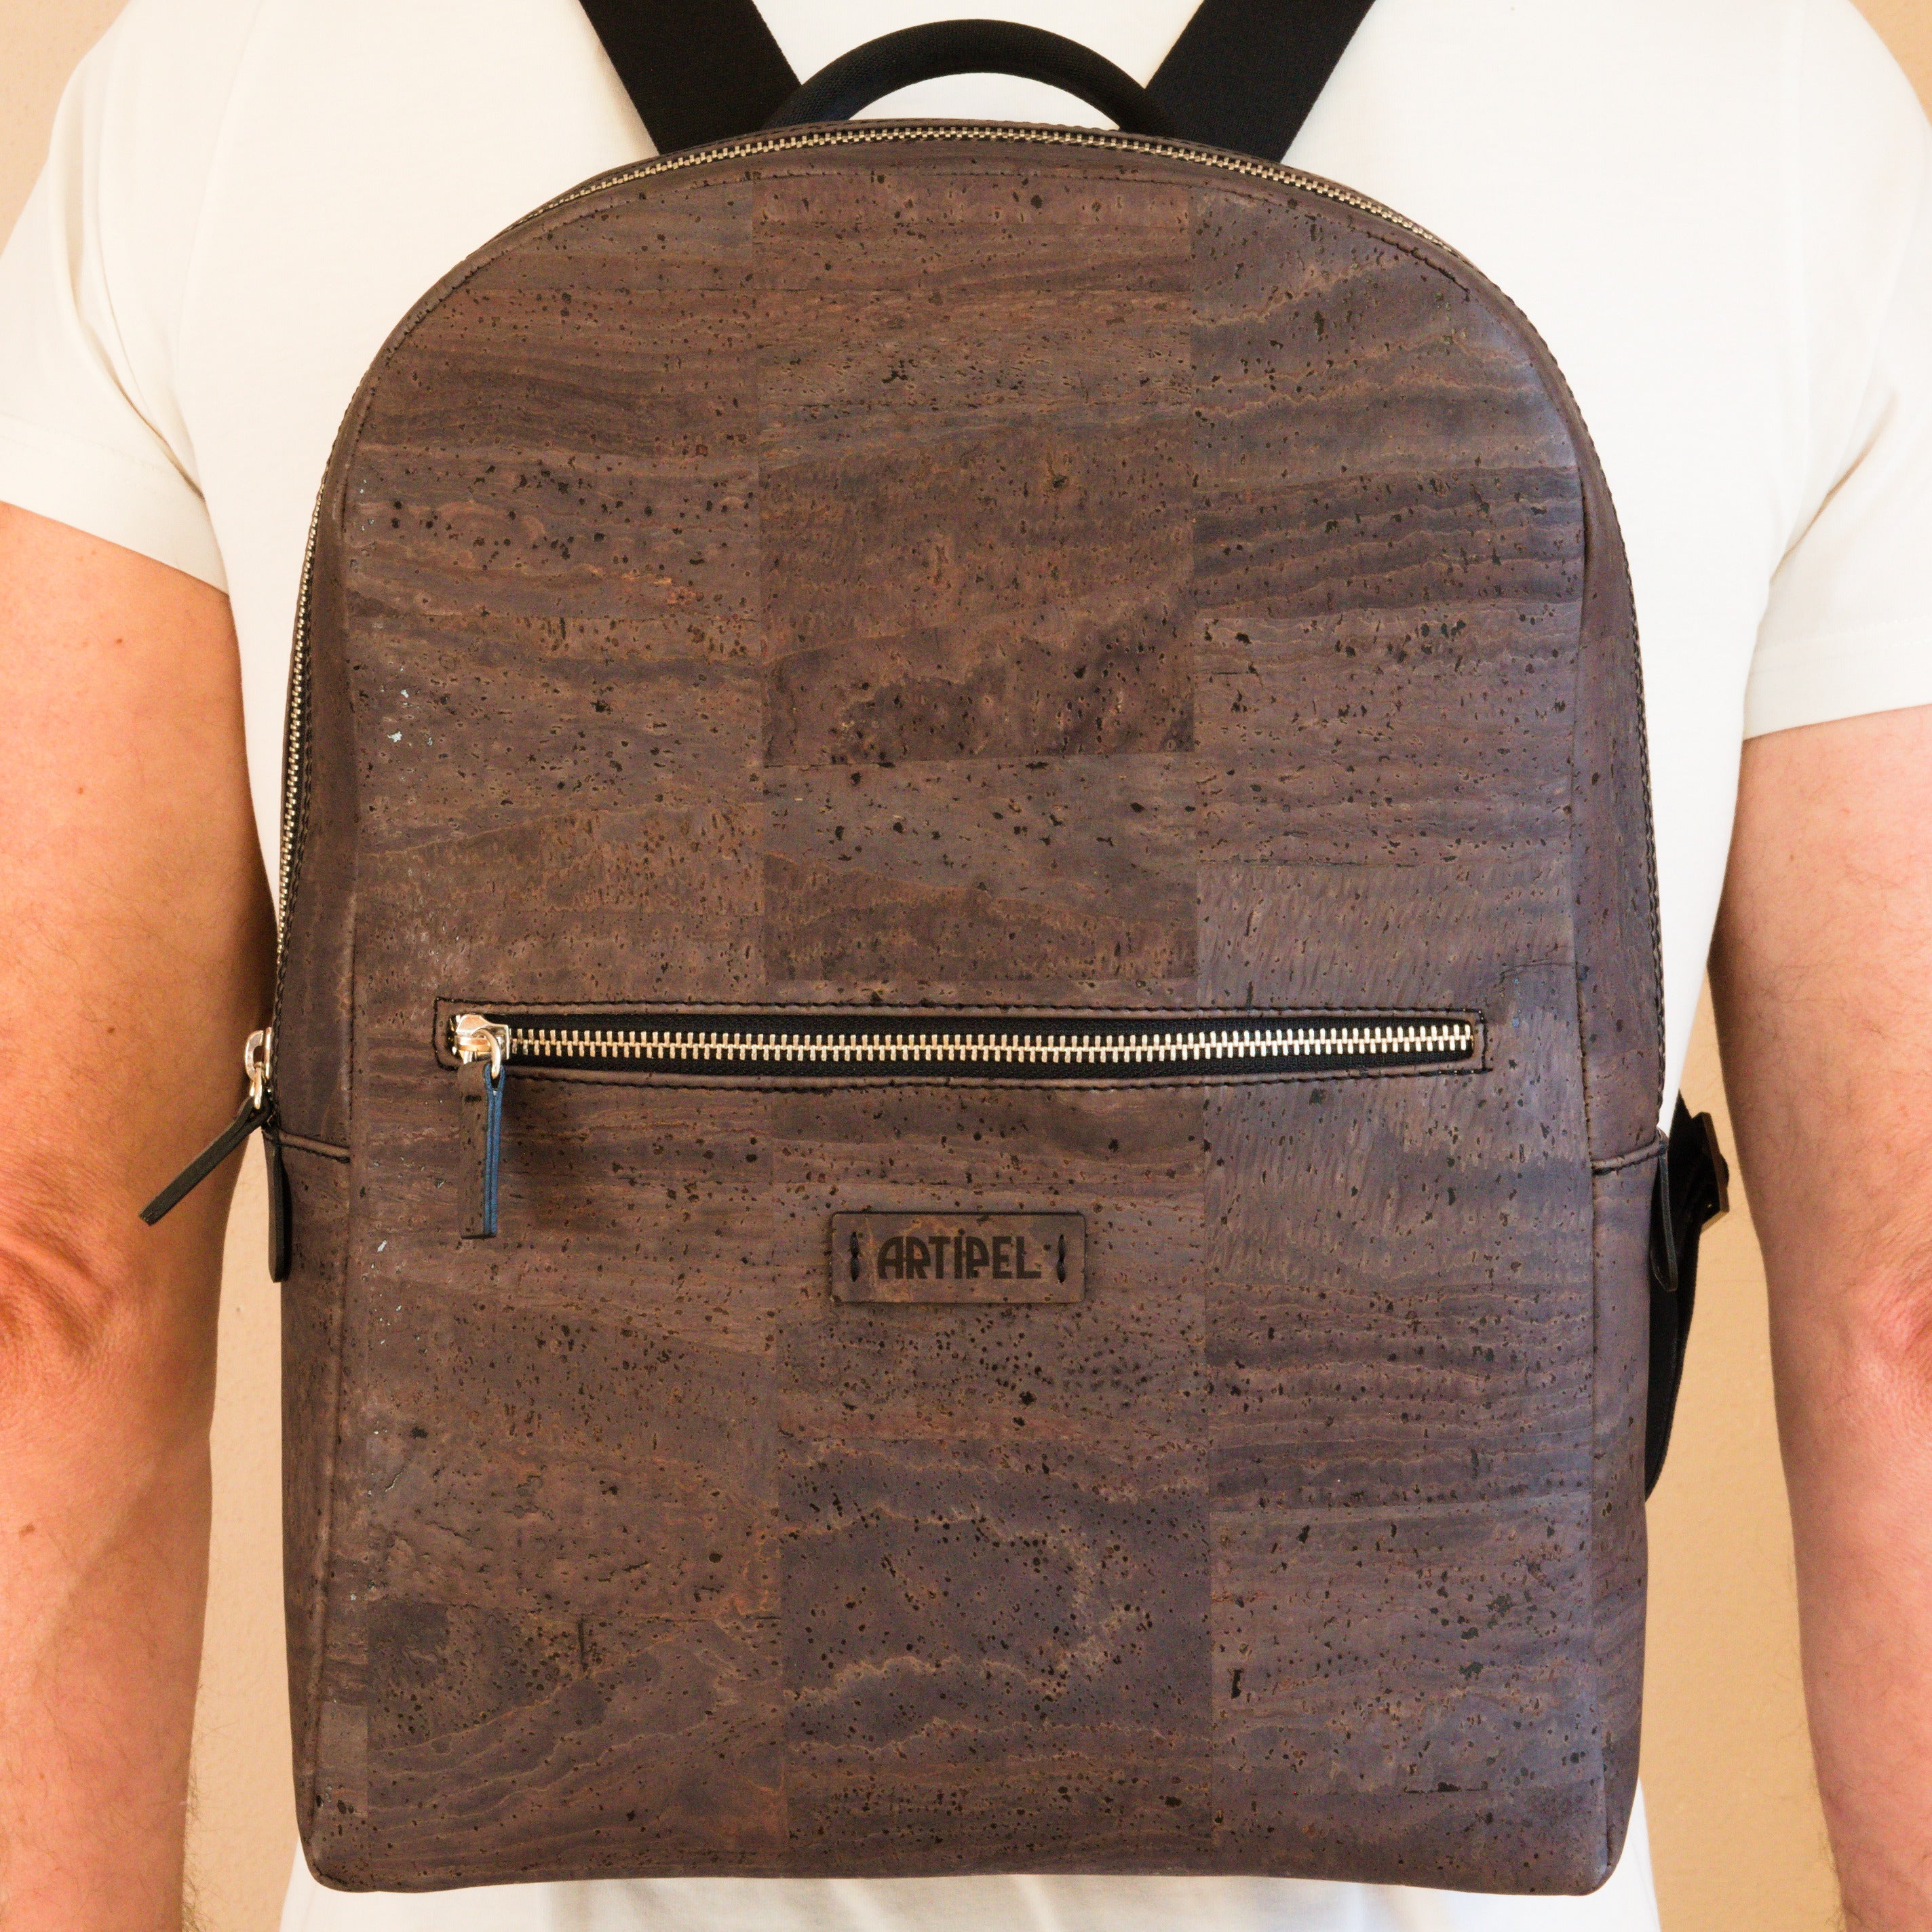 Kork Rucksack * Vegan * Rucksack für Männer * Backpack für Männer aus Kork * handmade in Portugal